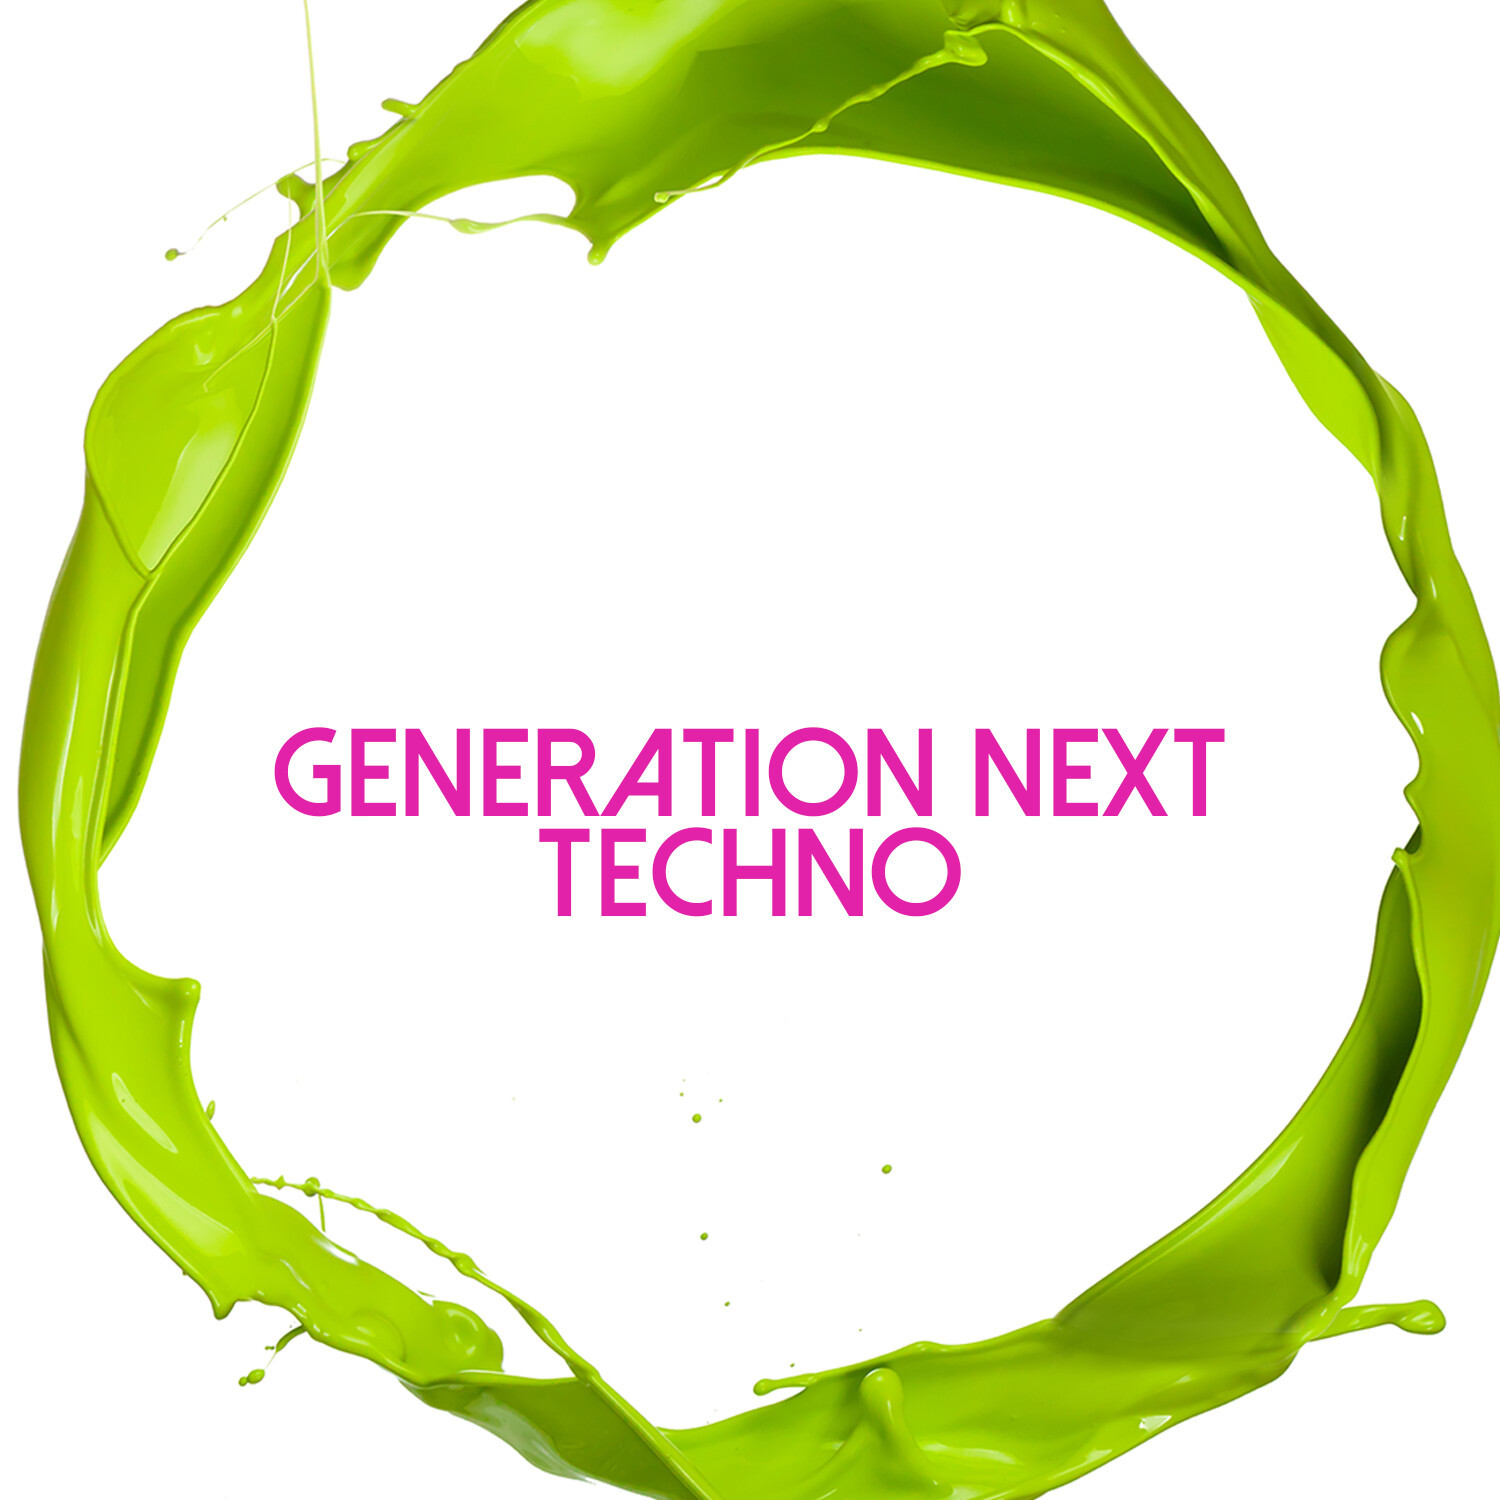 Generation Next Techno